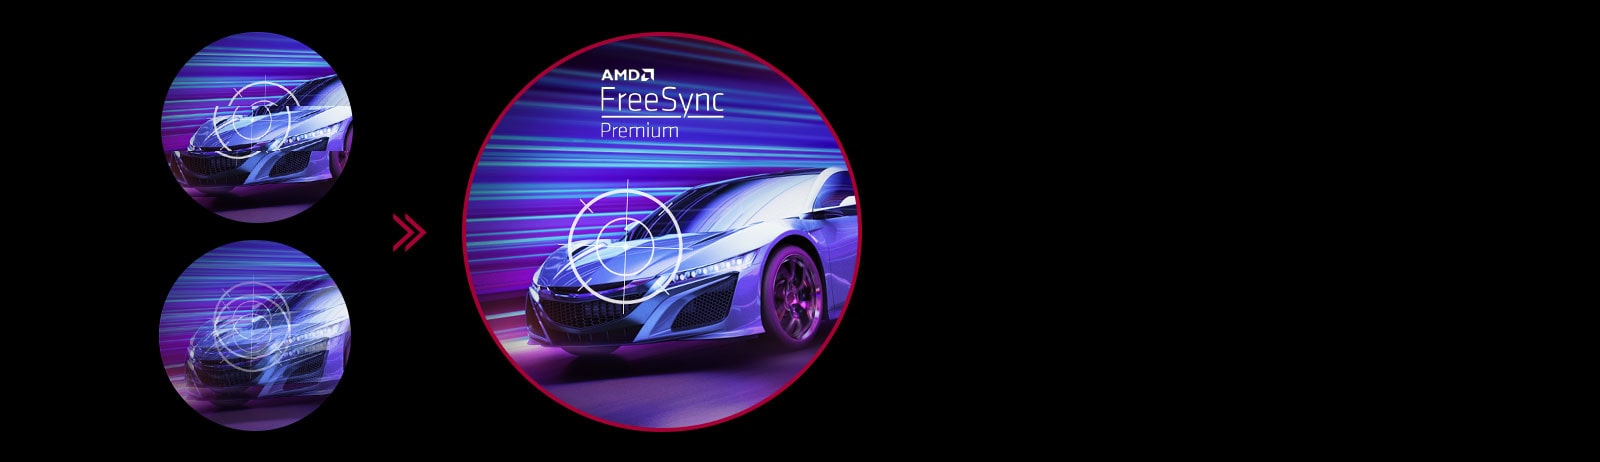 32uq750p-w AMD FreeSync™ Premium